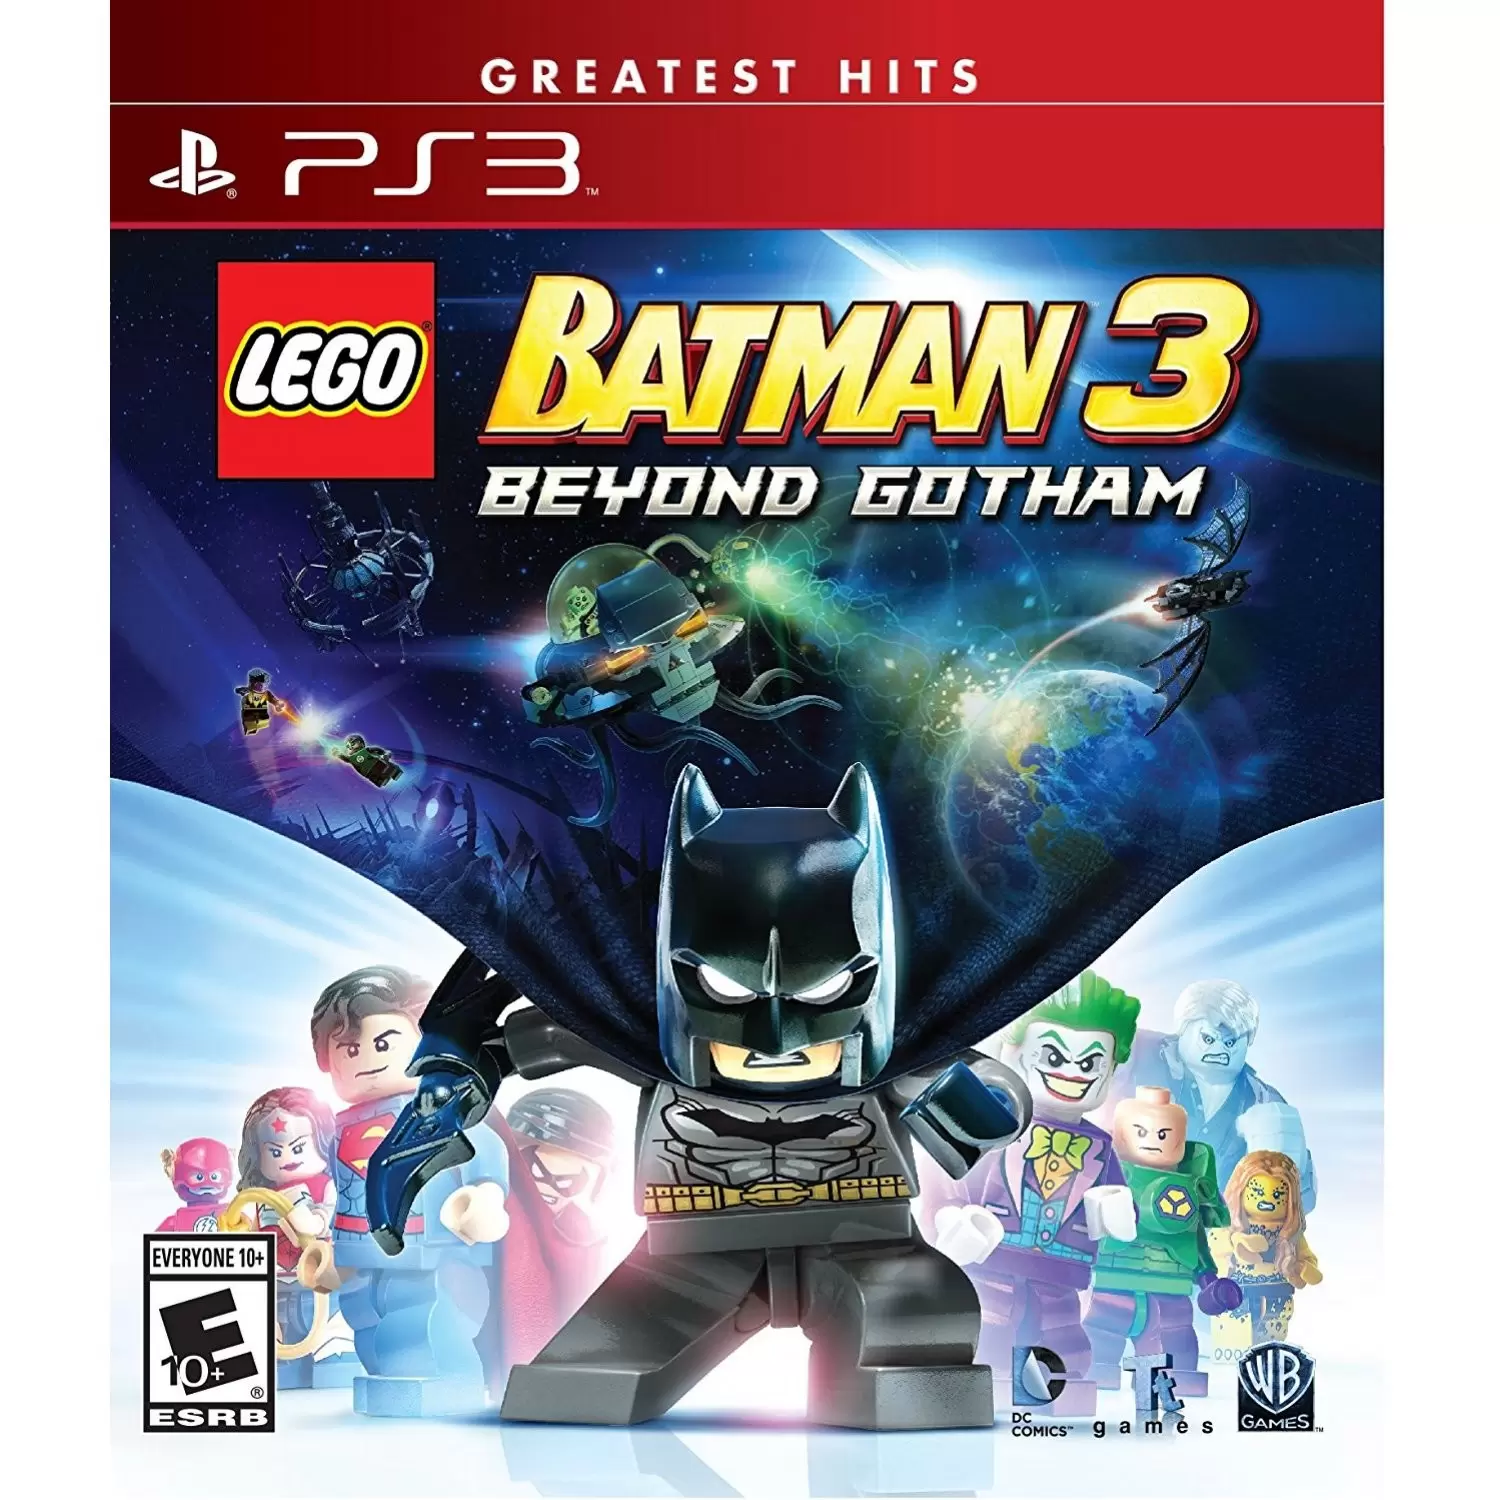 PS3 Games - LEGO Batman 3: Beyond Gotham Greatest Hits